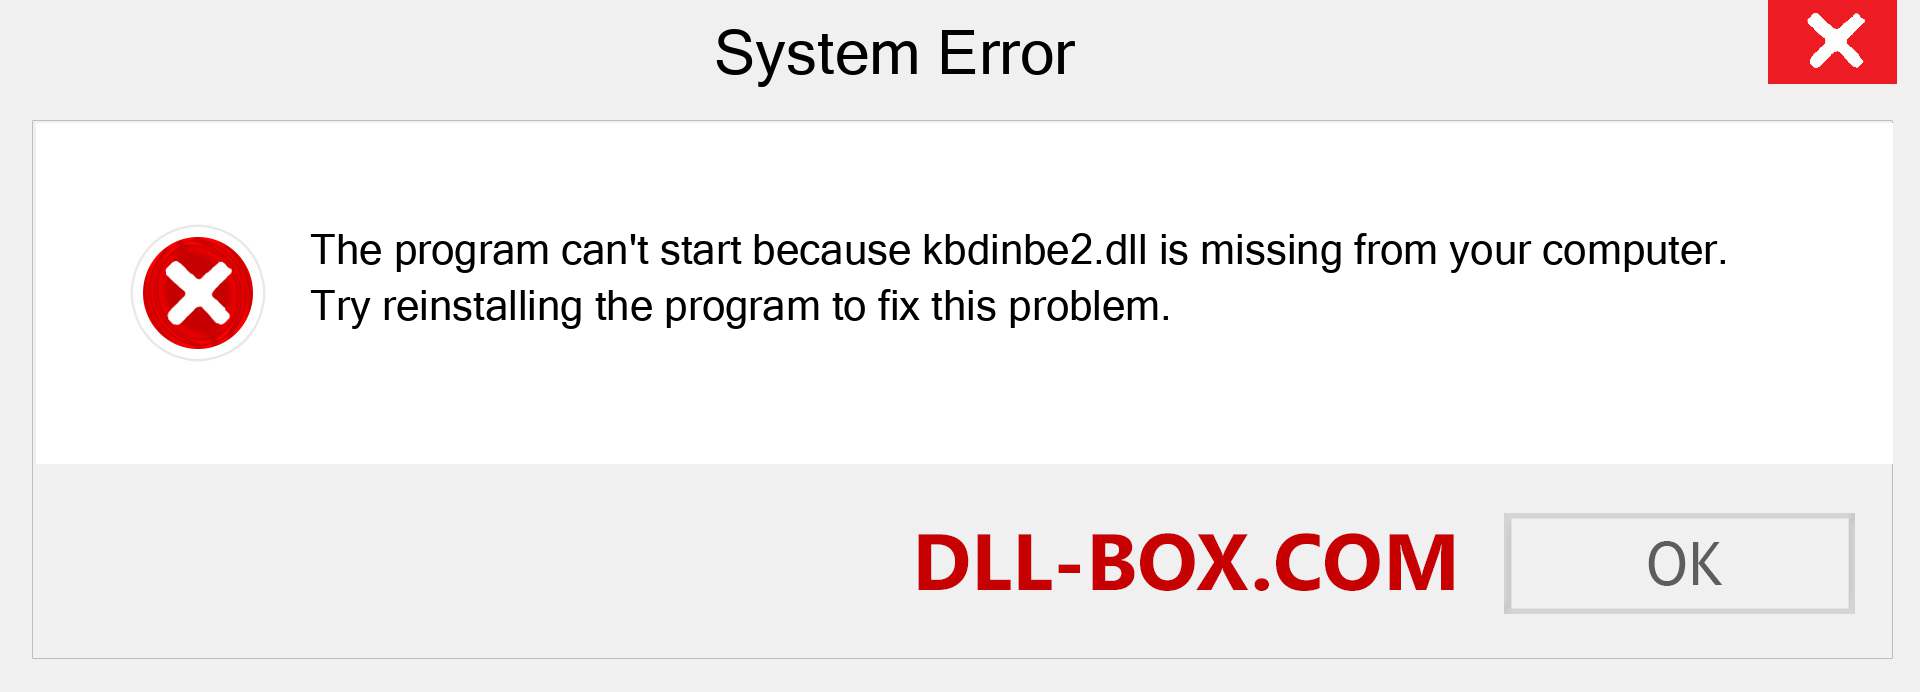  kbdinbe2.dll file is missing?. Download for Windows 7, 8, 10 - Fix  kbdinbe2 dll Missing Error on Windows, photos, images